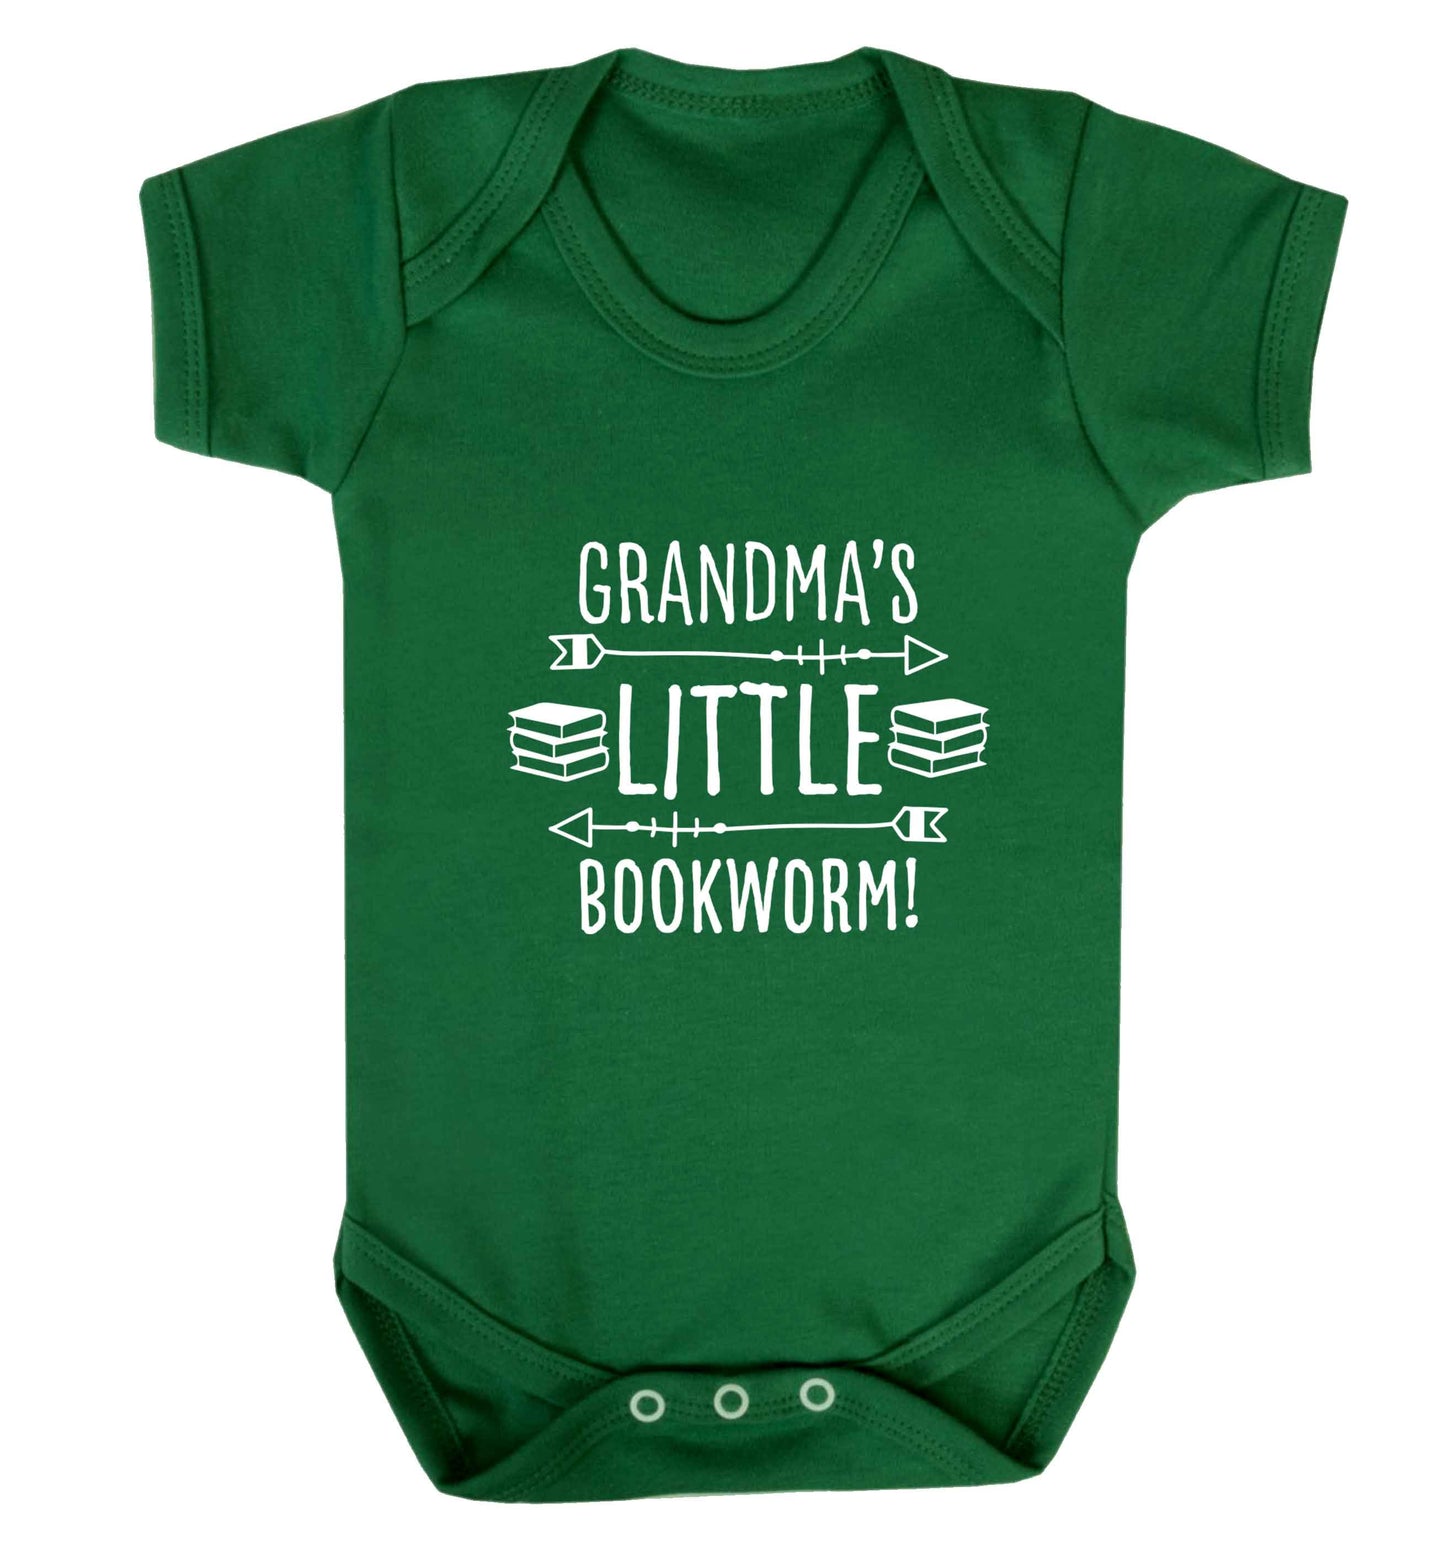 Grandma's little bookworm baby vest green 18-24 months